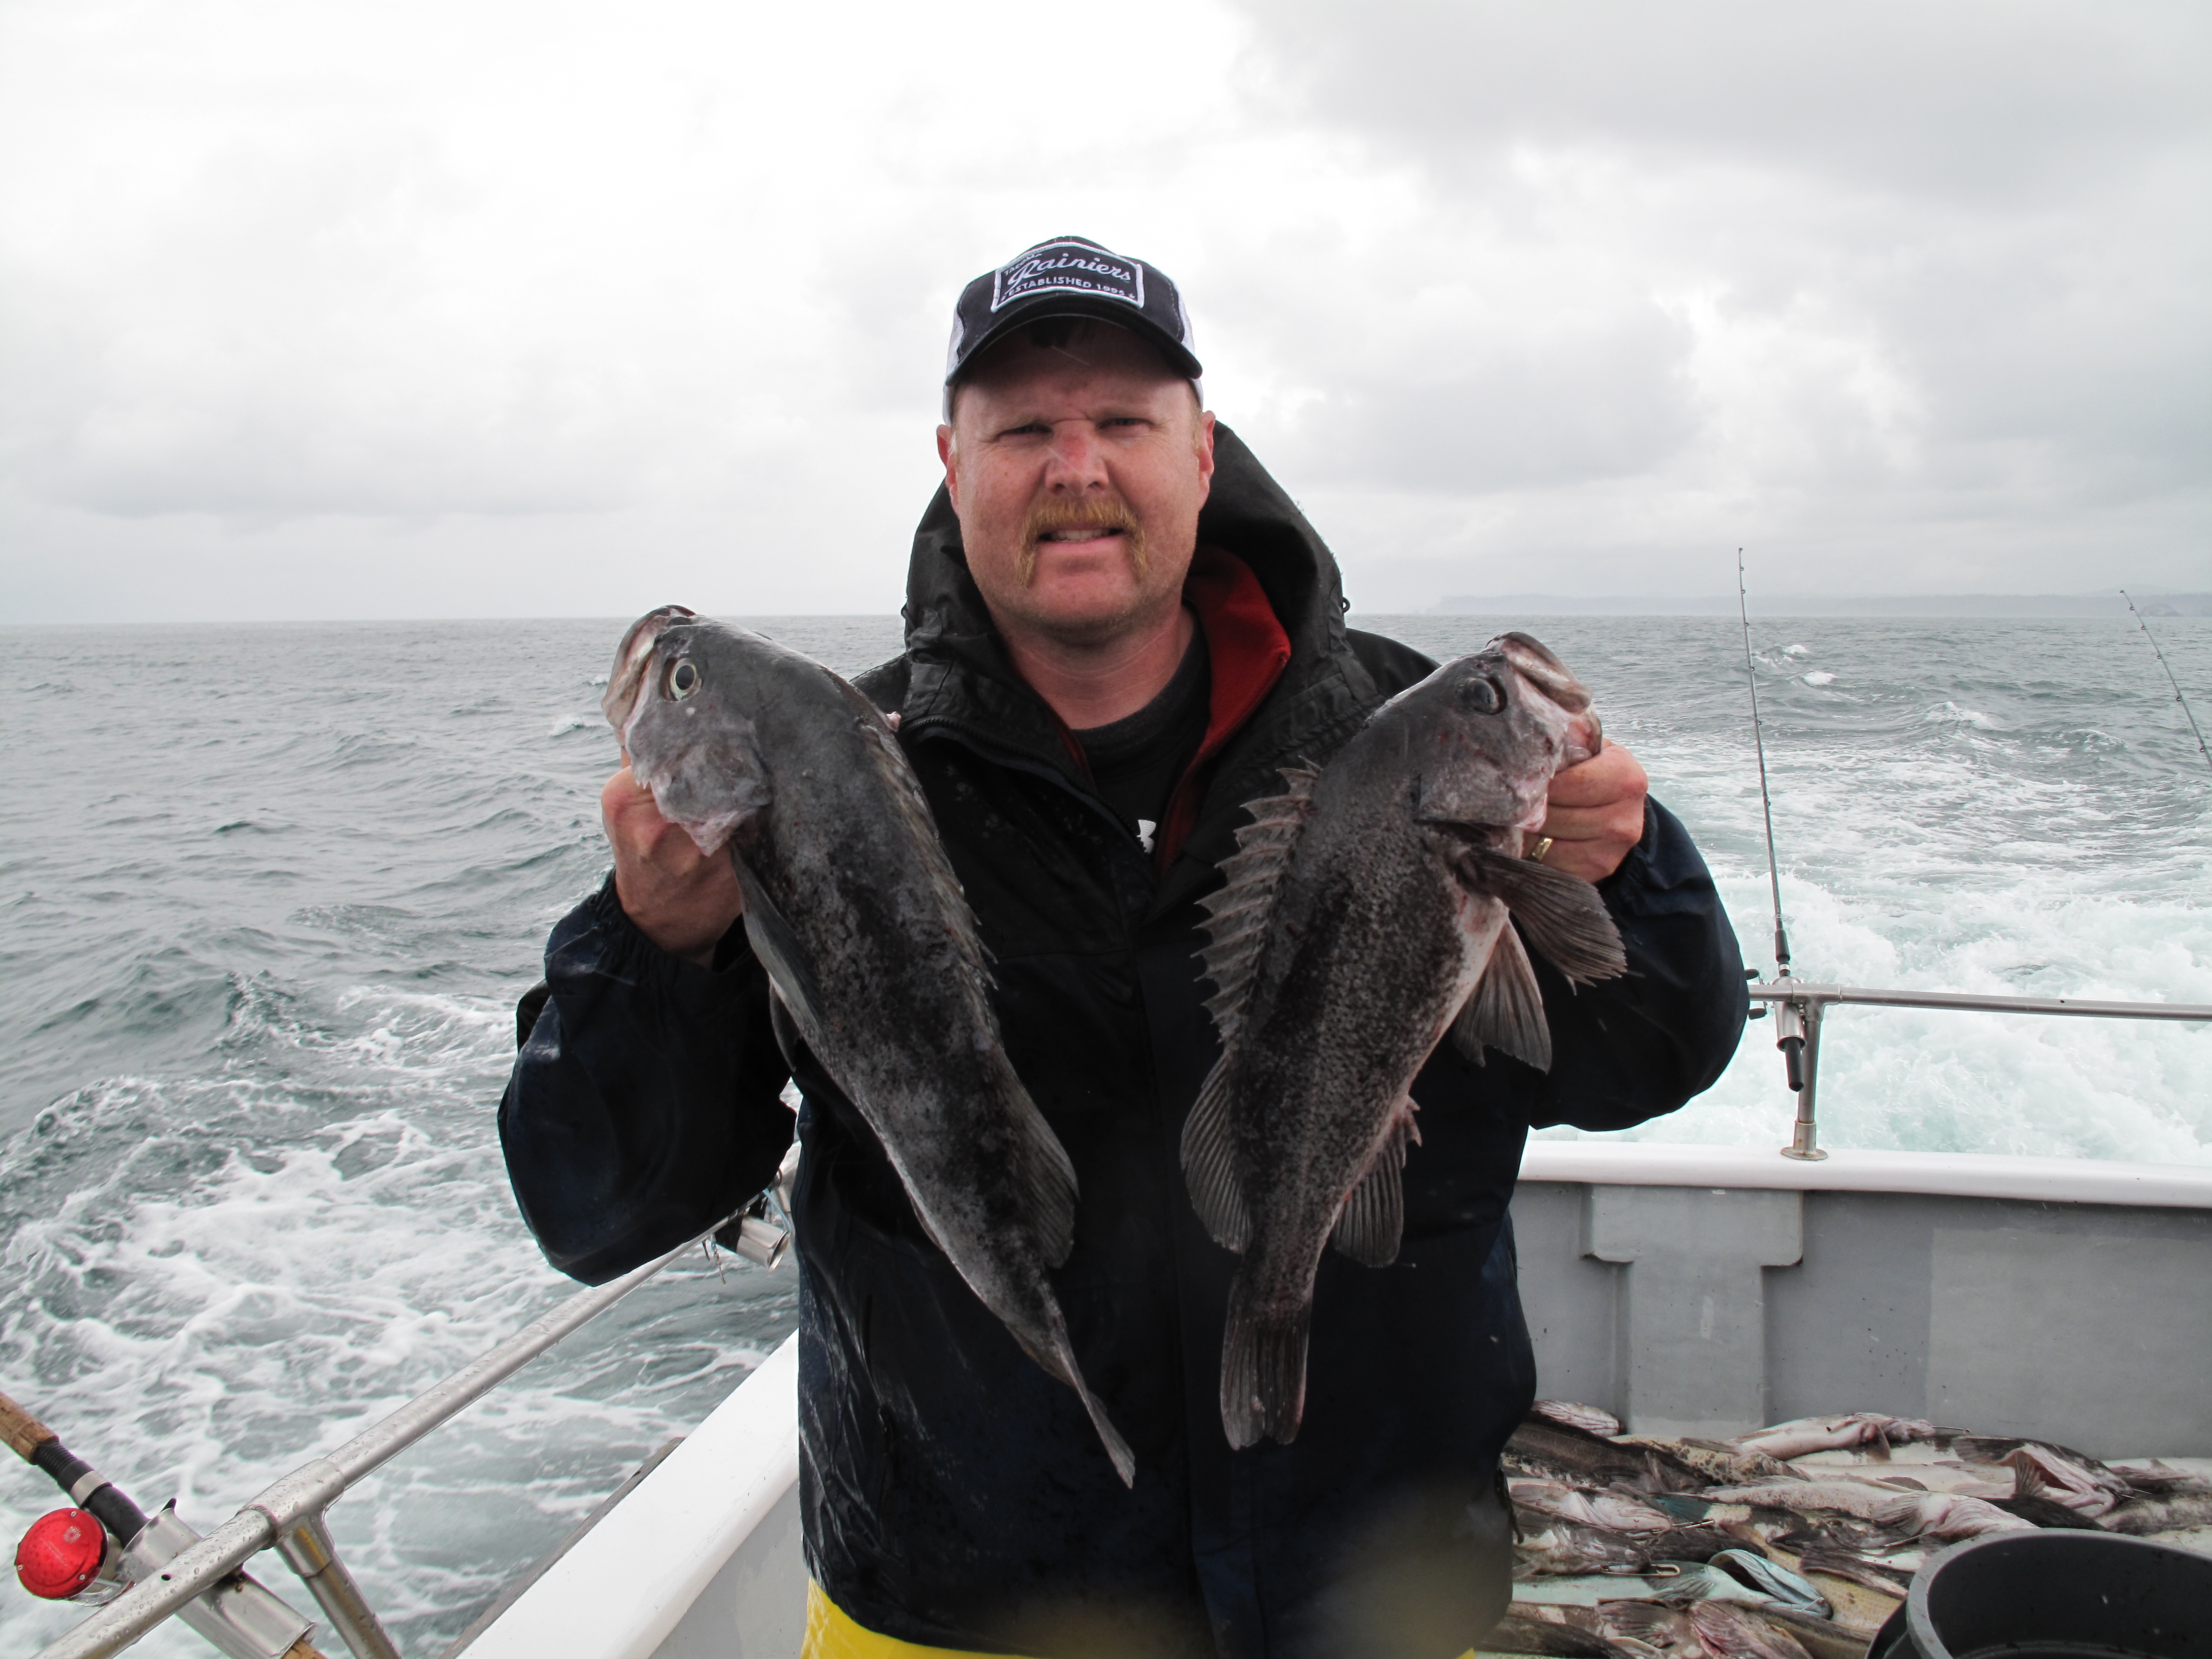 Best Mooching Rod?  IFish Fishing Forum